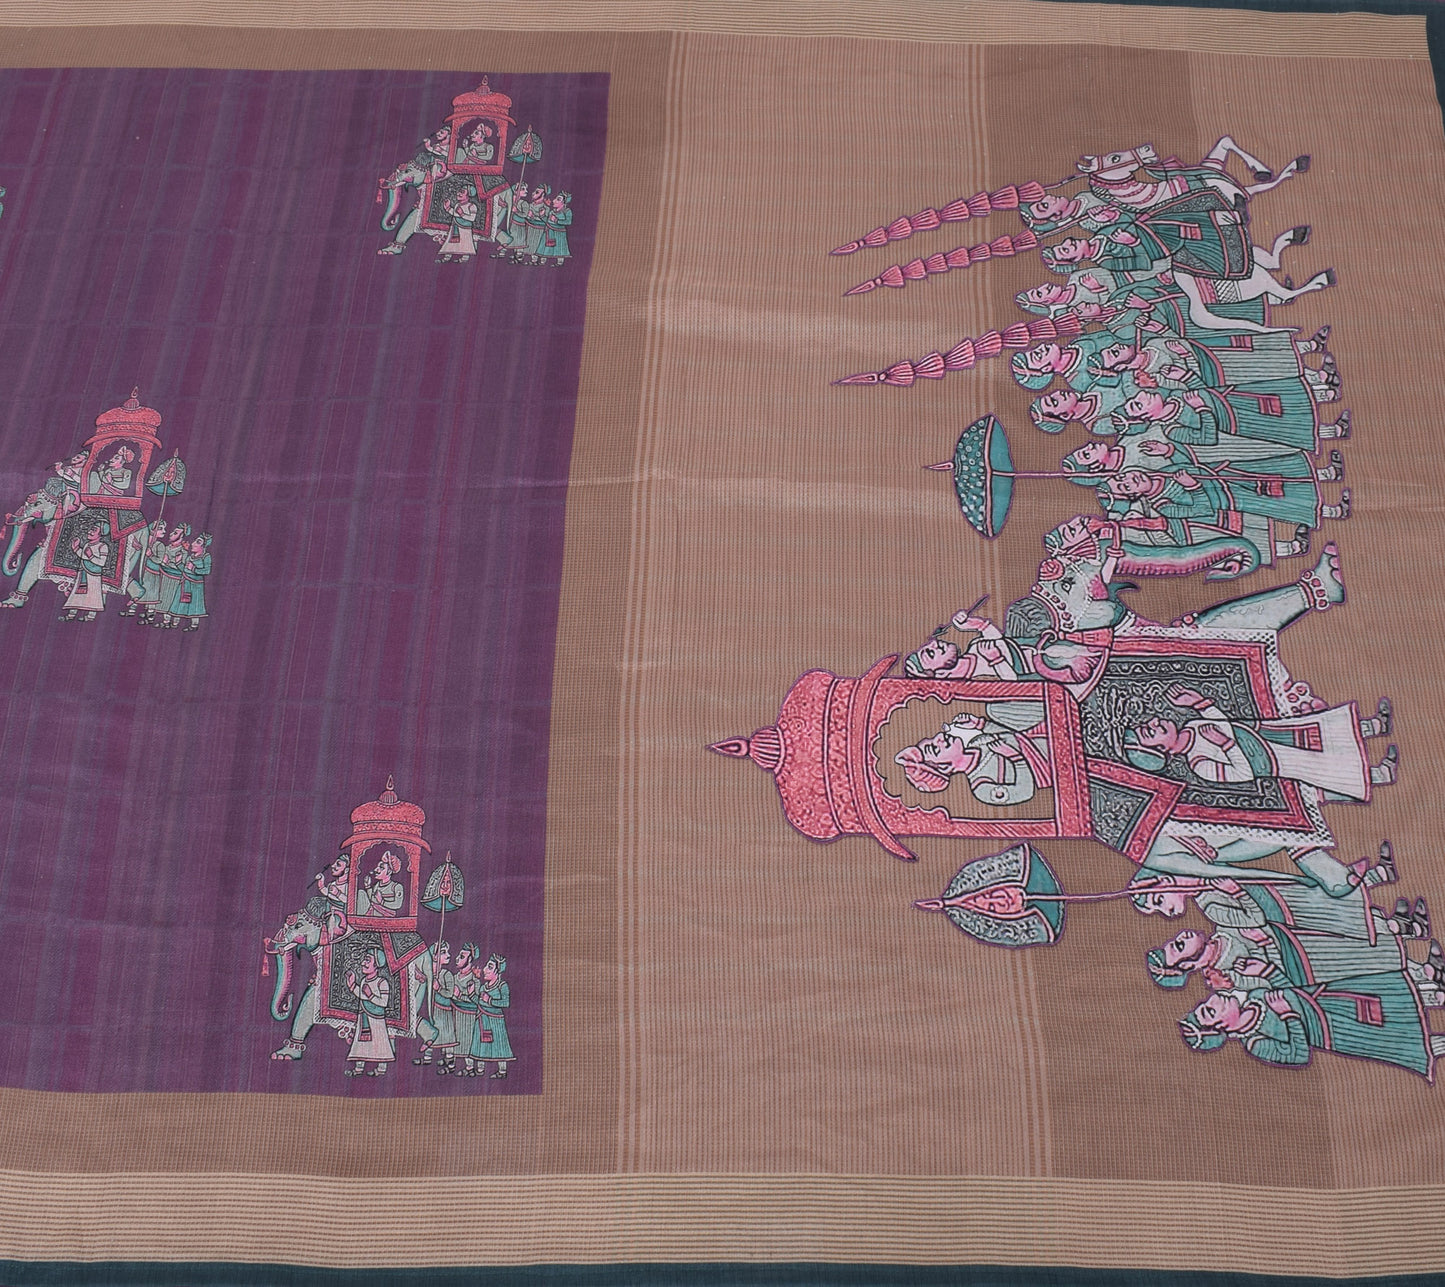 Sushila Vintage Purple Saree Blend Silk Printed Elephant & Human Sari Fabric